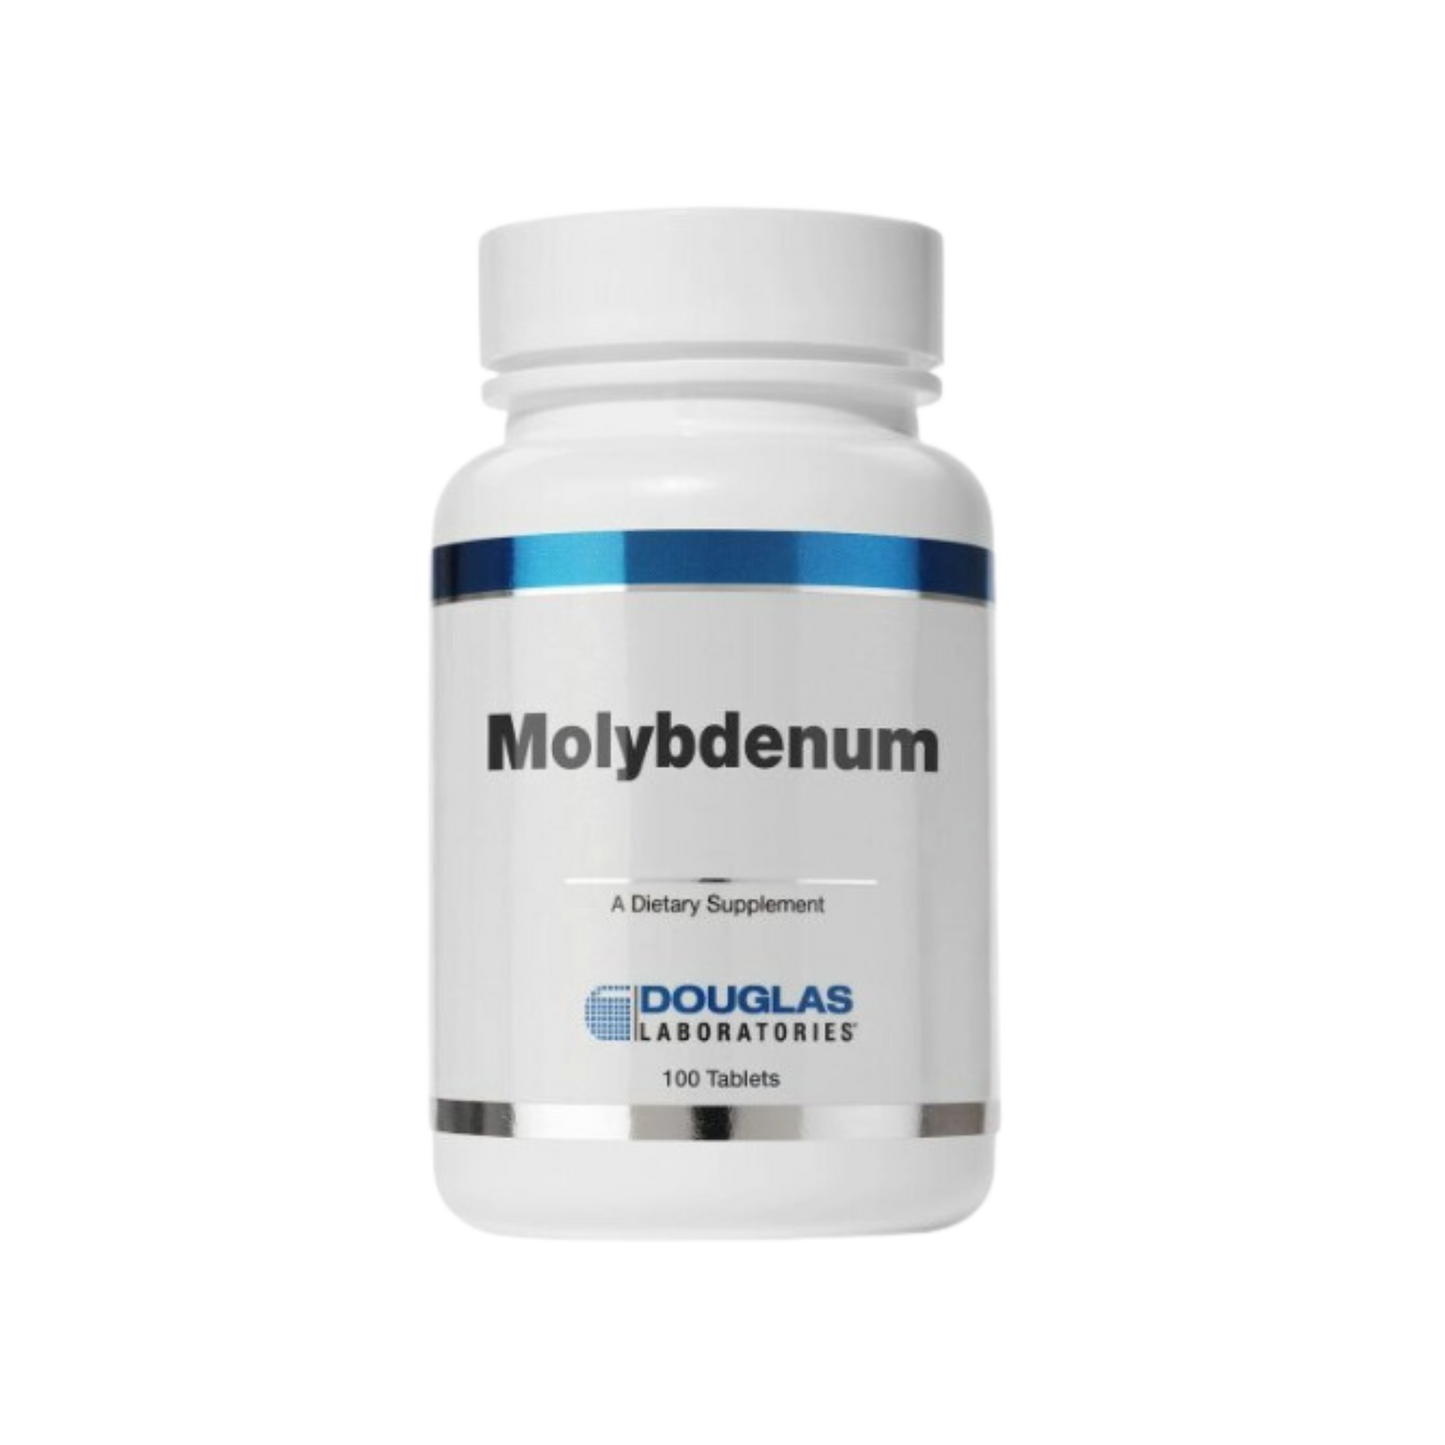 Douglas Labs Molybdenum Tablets